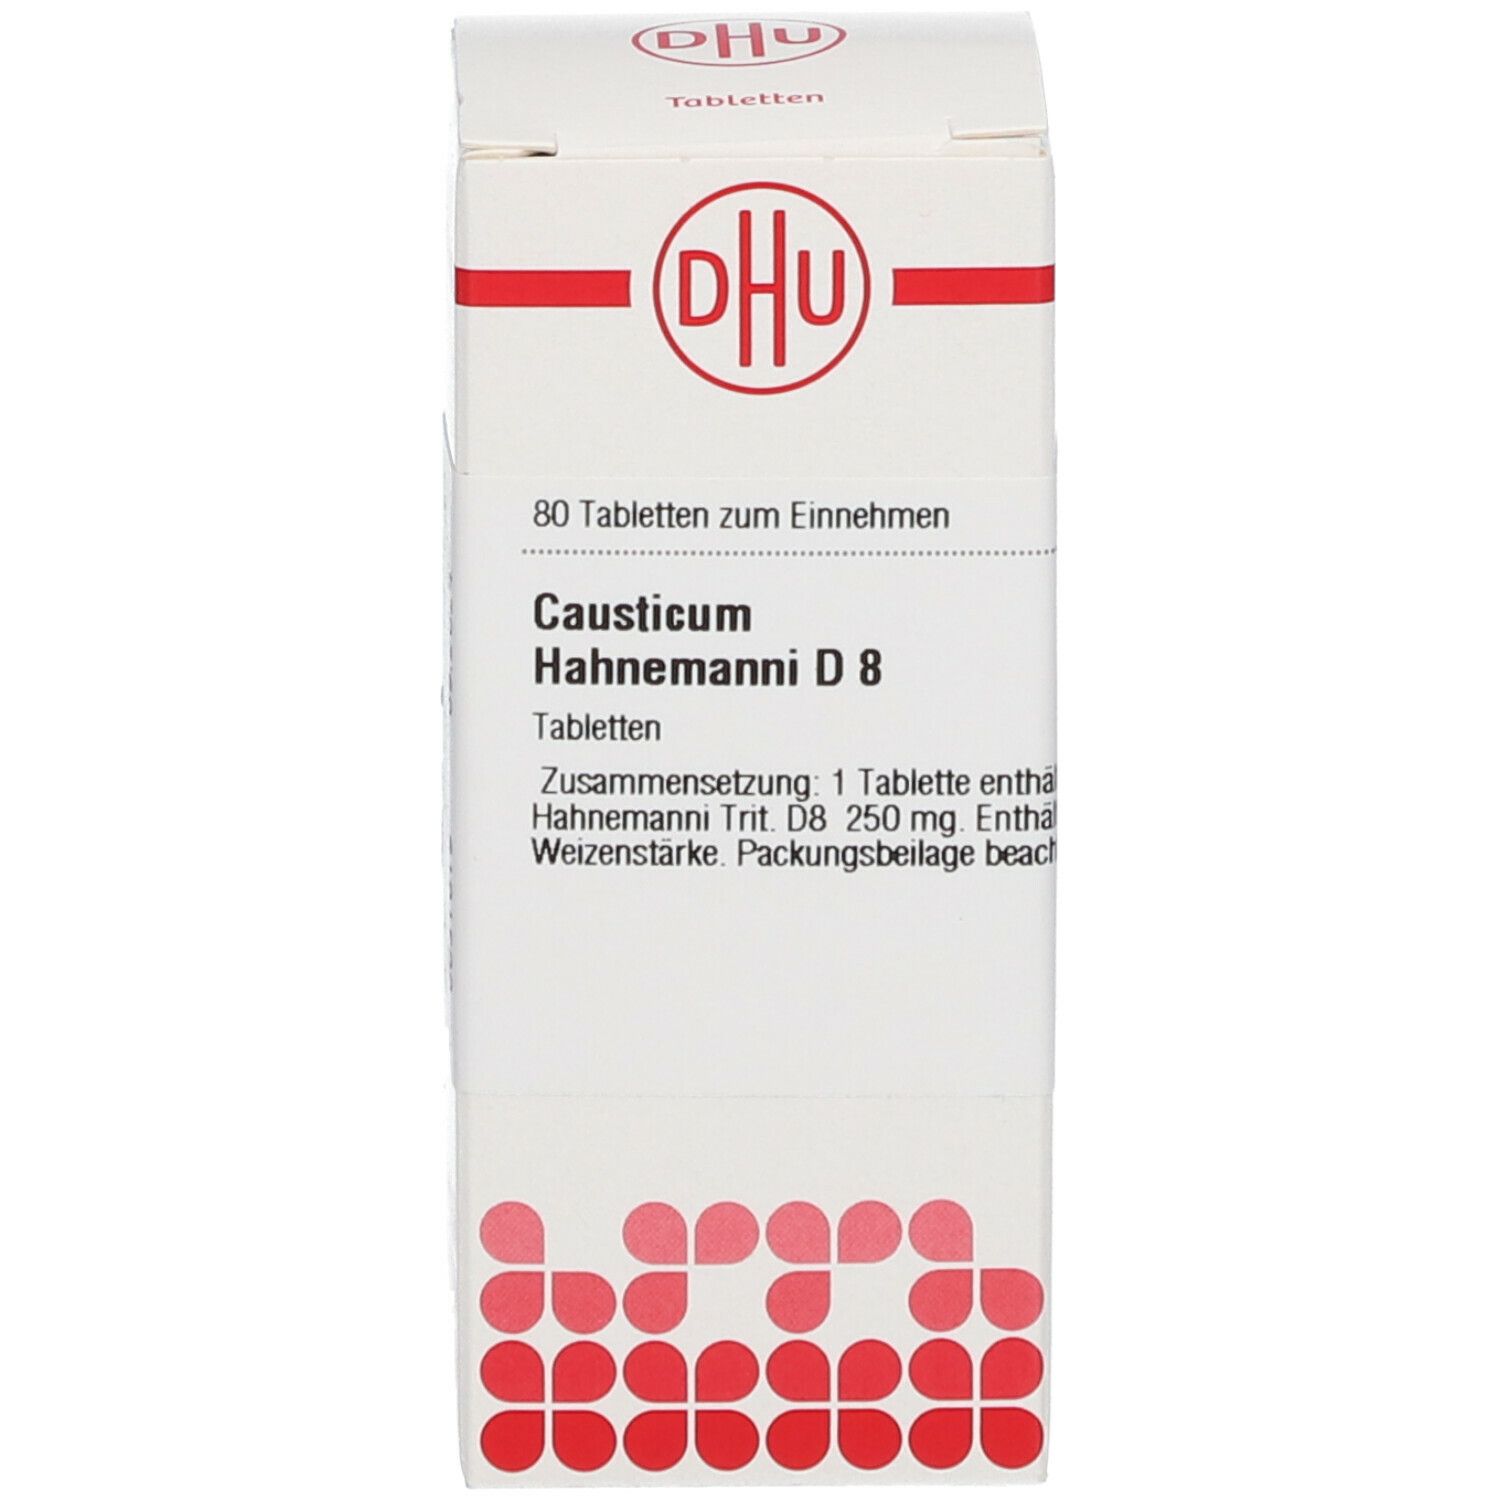 DHU Causticum Hahnemanni D8